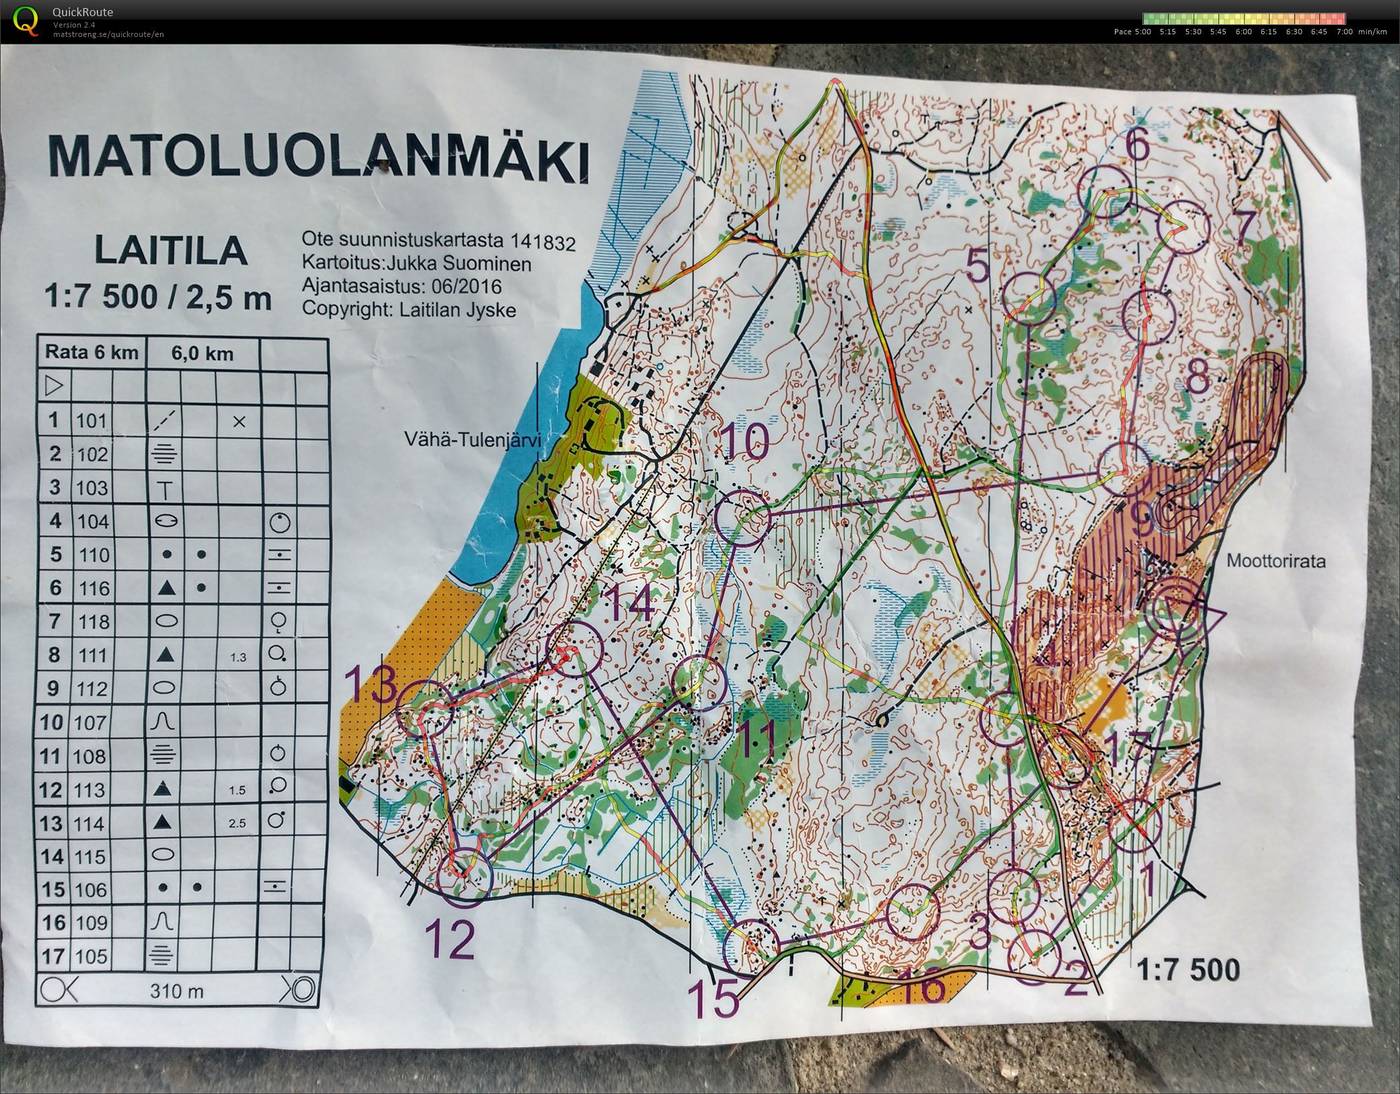 Vähä-Tulenjärvi 3*10' (29/05/2018)